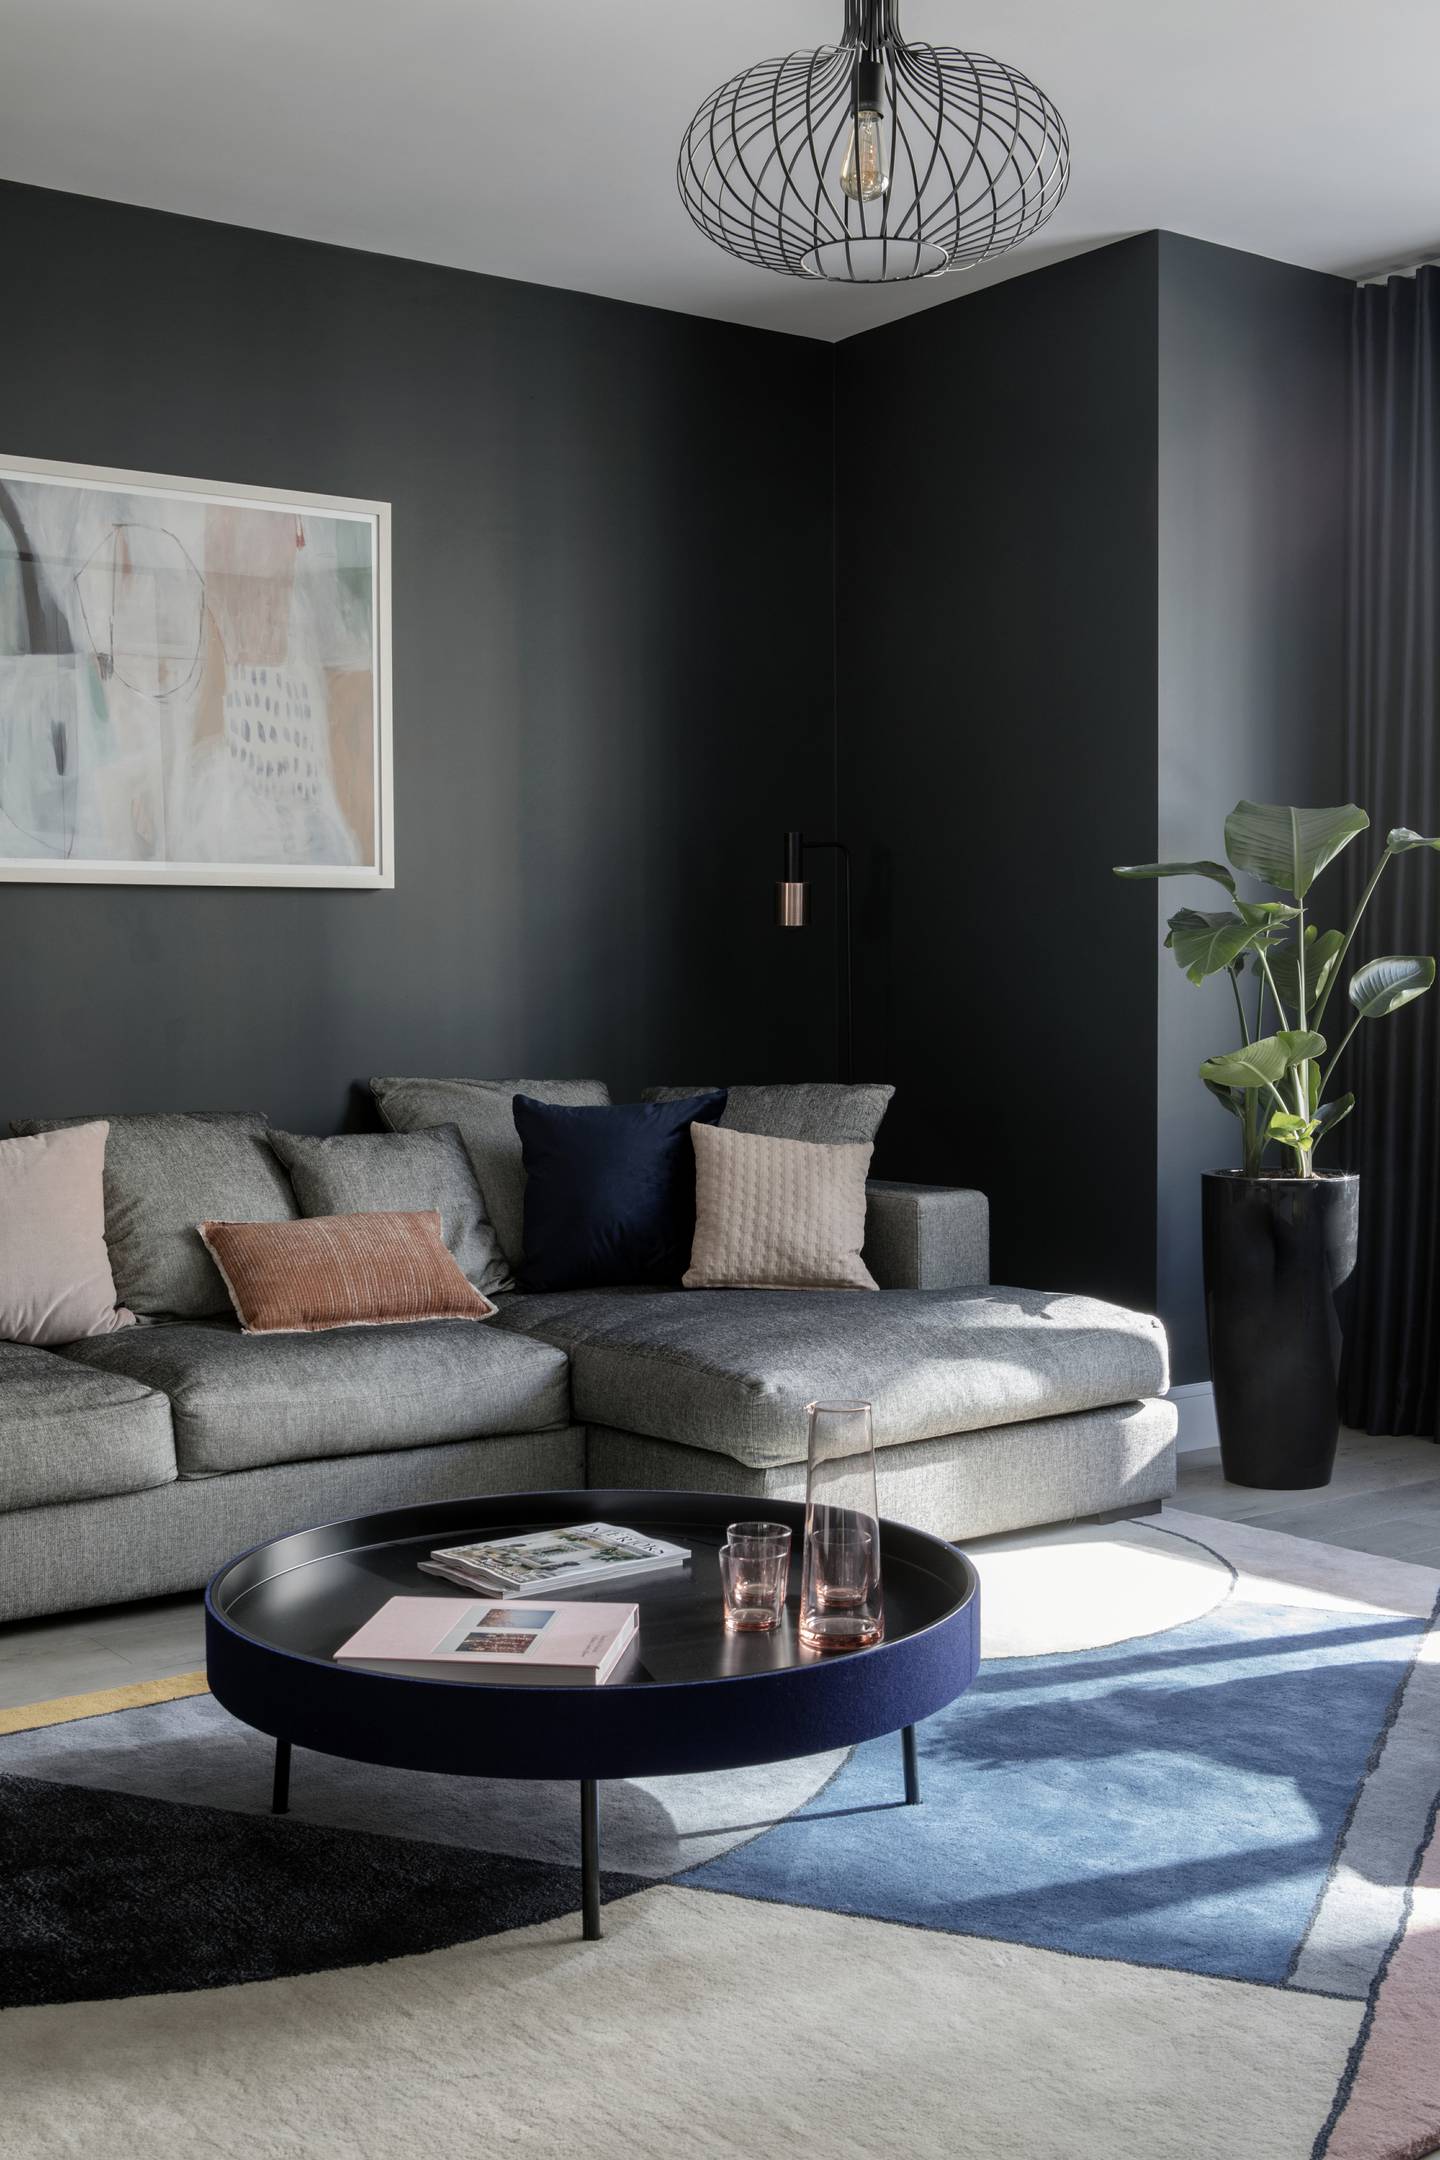 A living room designed by Optimise Design.